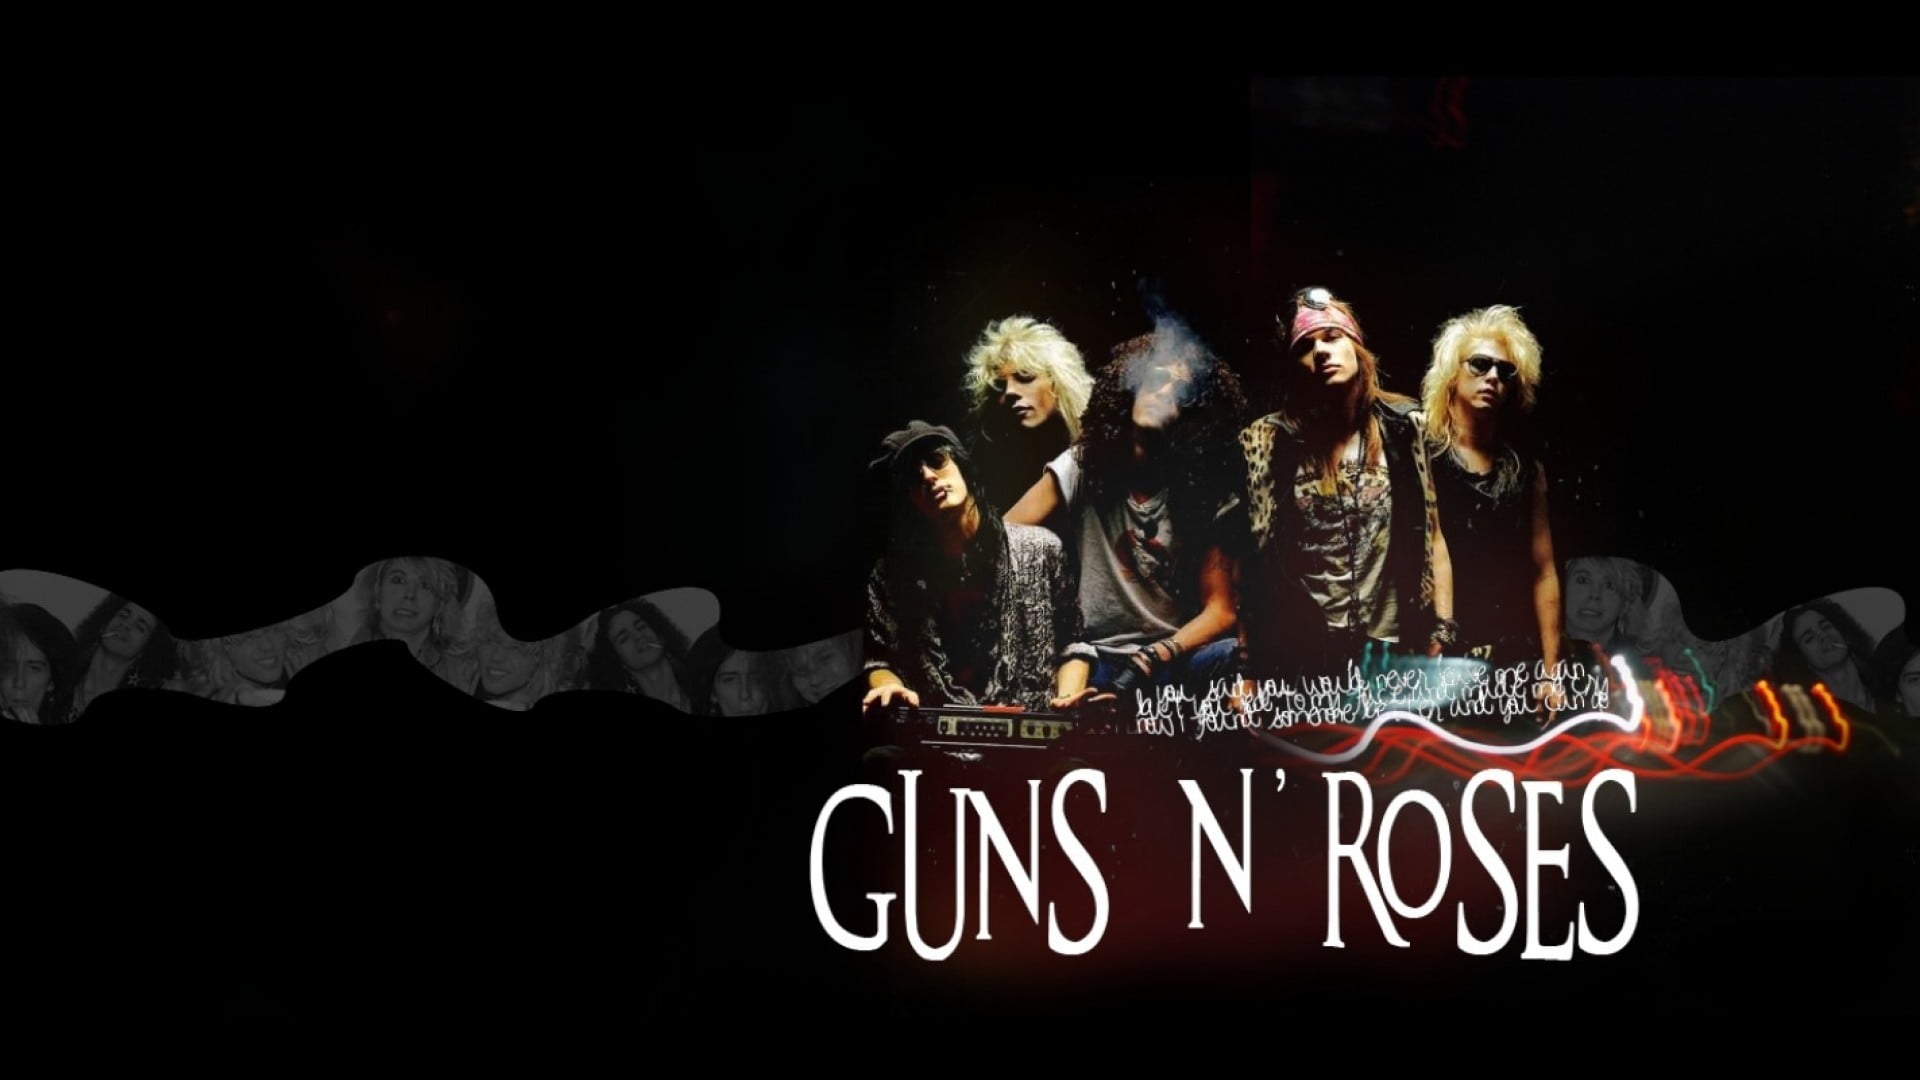 Guns N' Roses digital wallpaper, music, text, western script